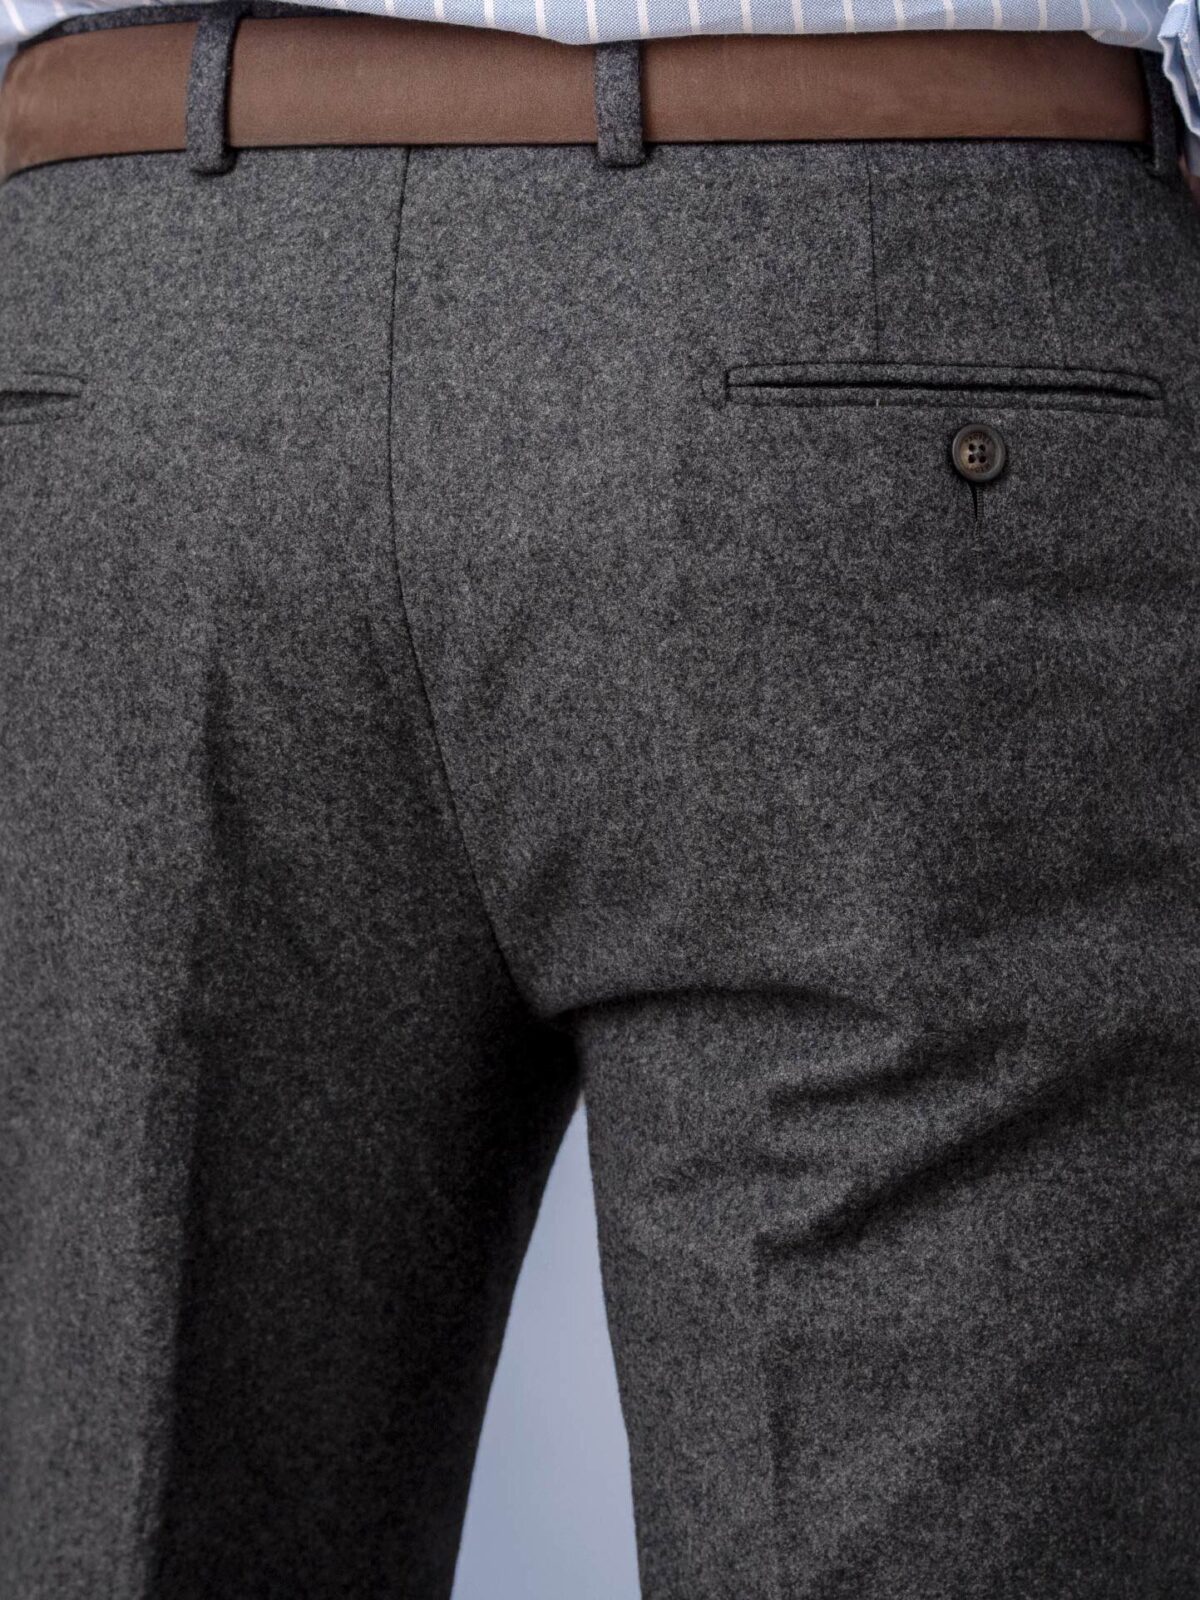 VBC Grey Wool Flannel Dress Pant with Plain Hem - Custom Fit